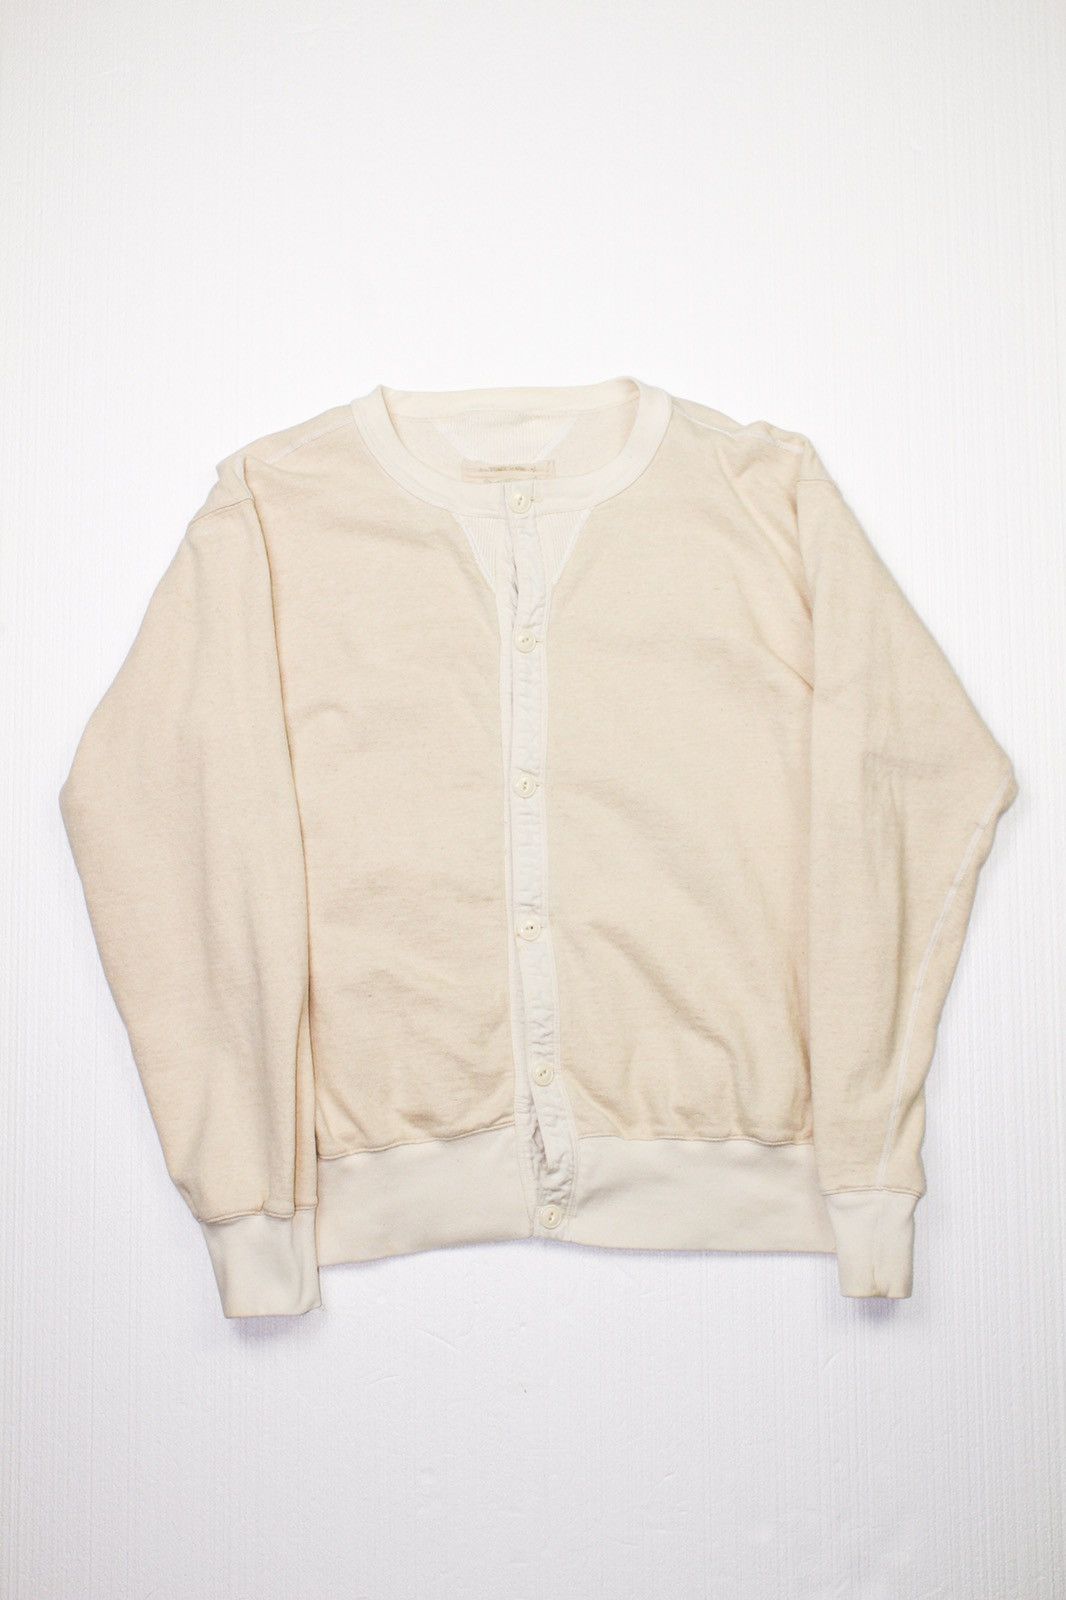 Kapital *LAST DROP* Button Up Sweatshirt Cardigan Size US XL / EU 56 / 4 - 1 Preview